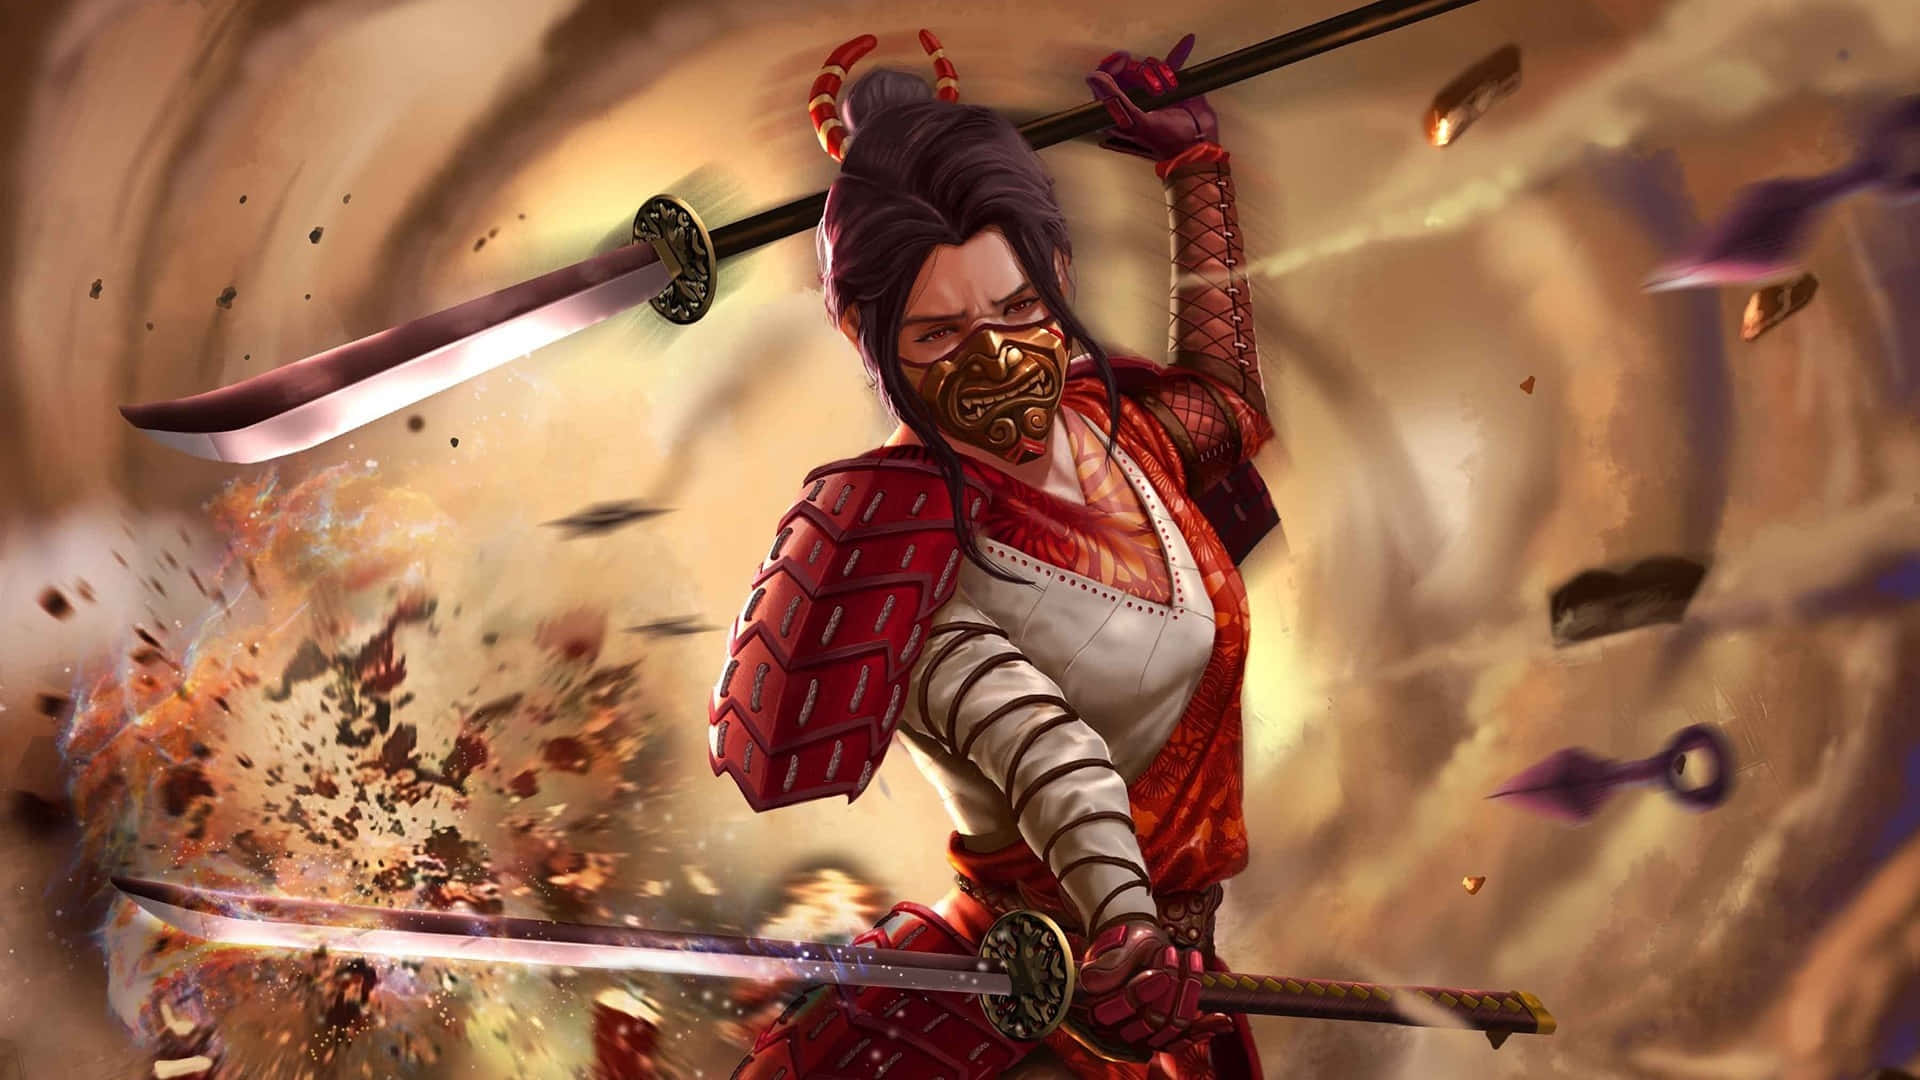 Fearless Female Samurai in Battle Pose Wallpaper